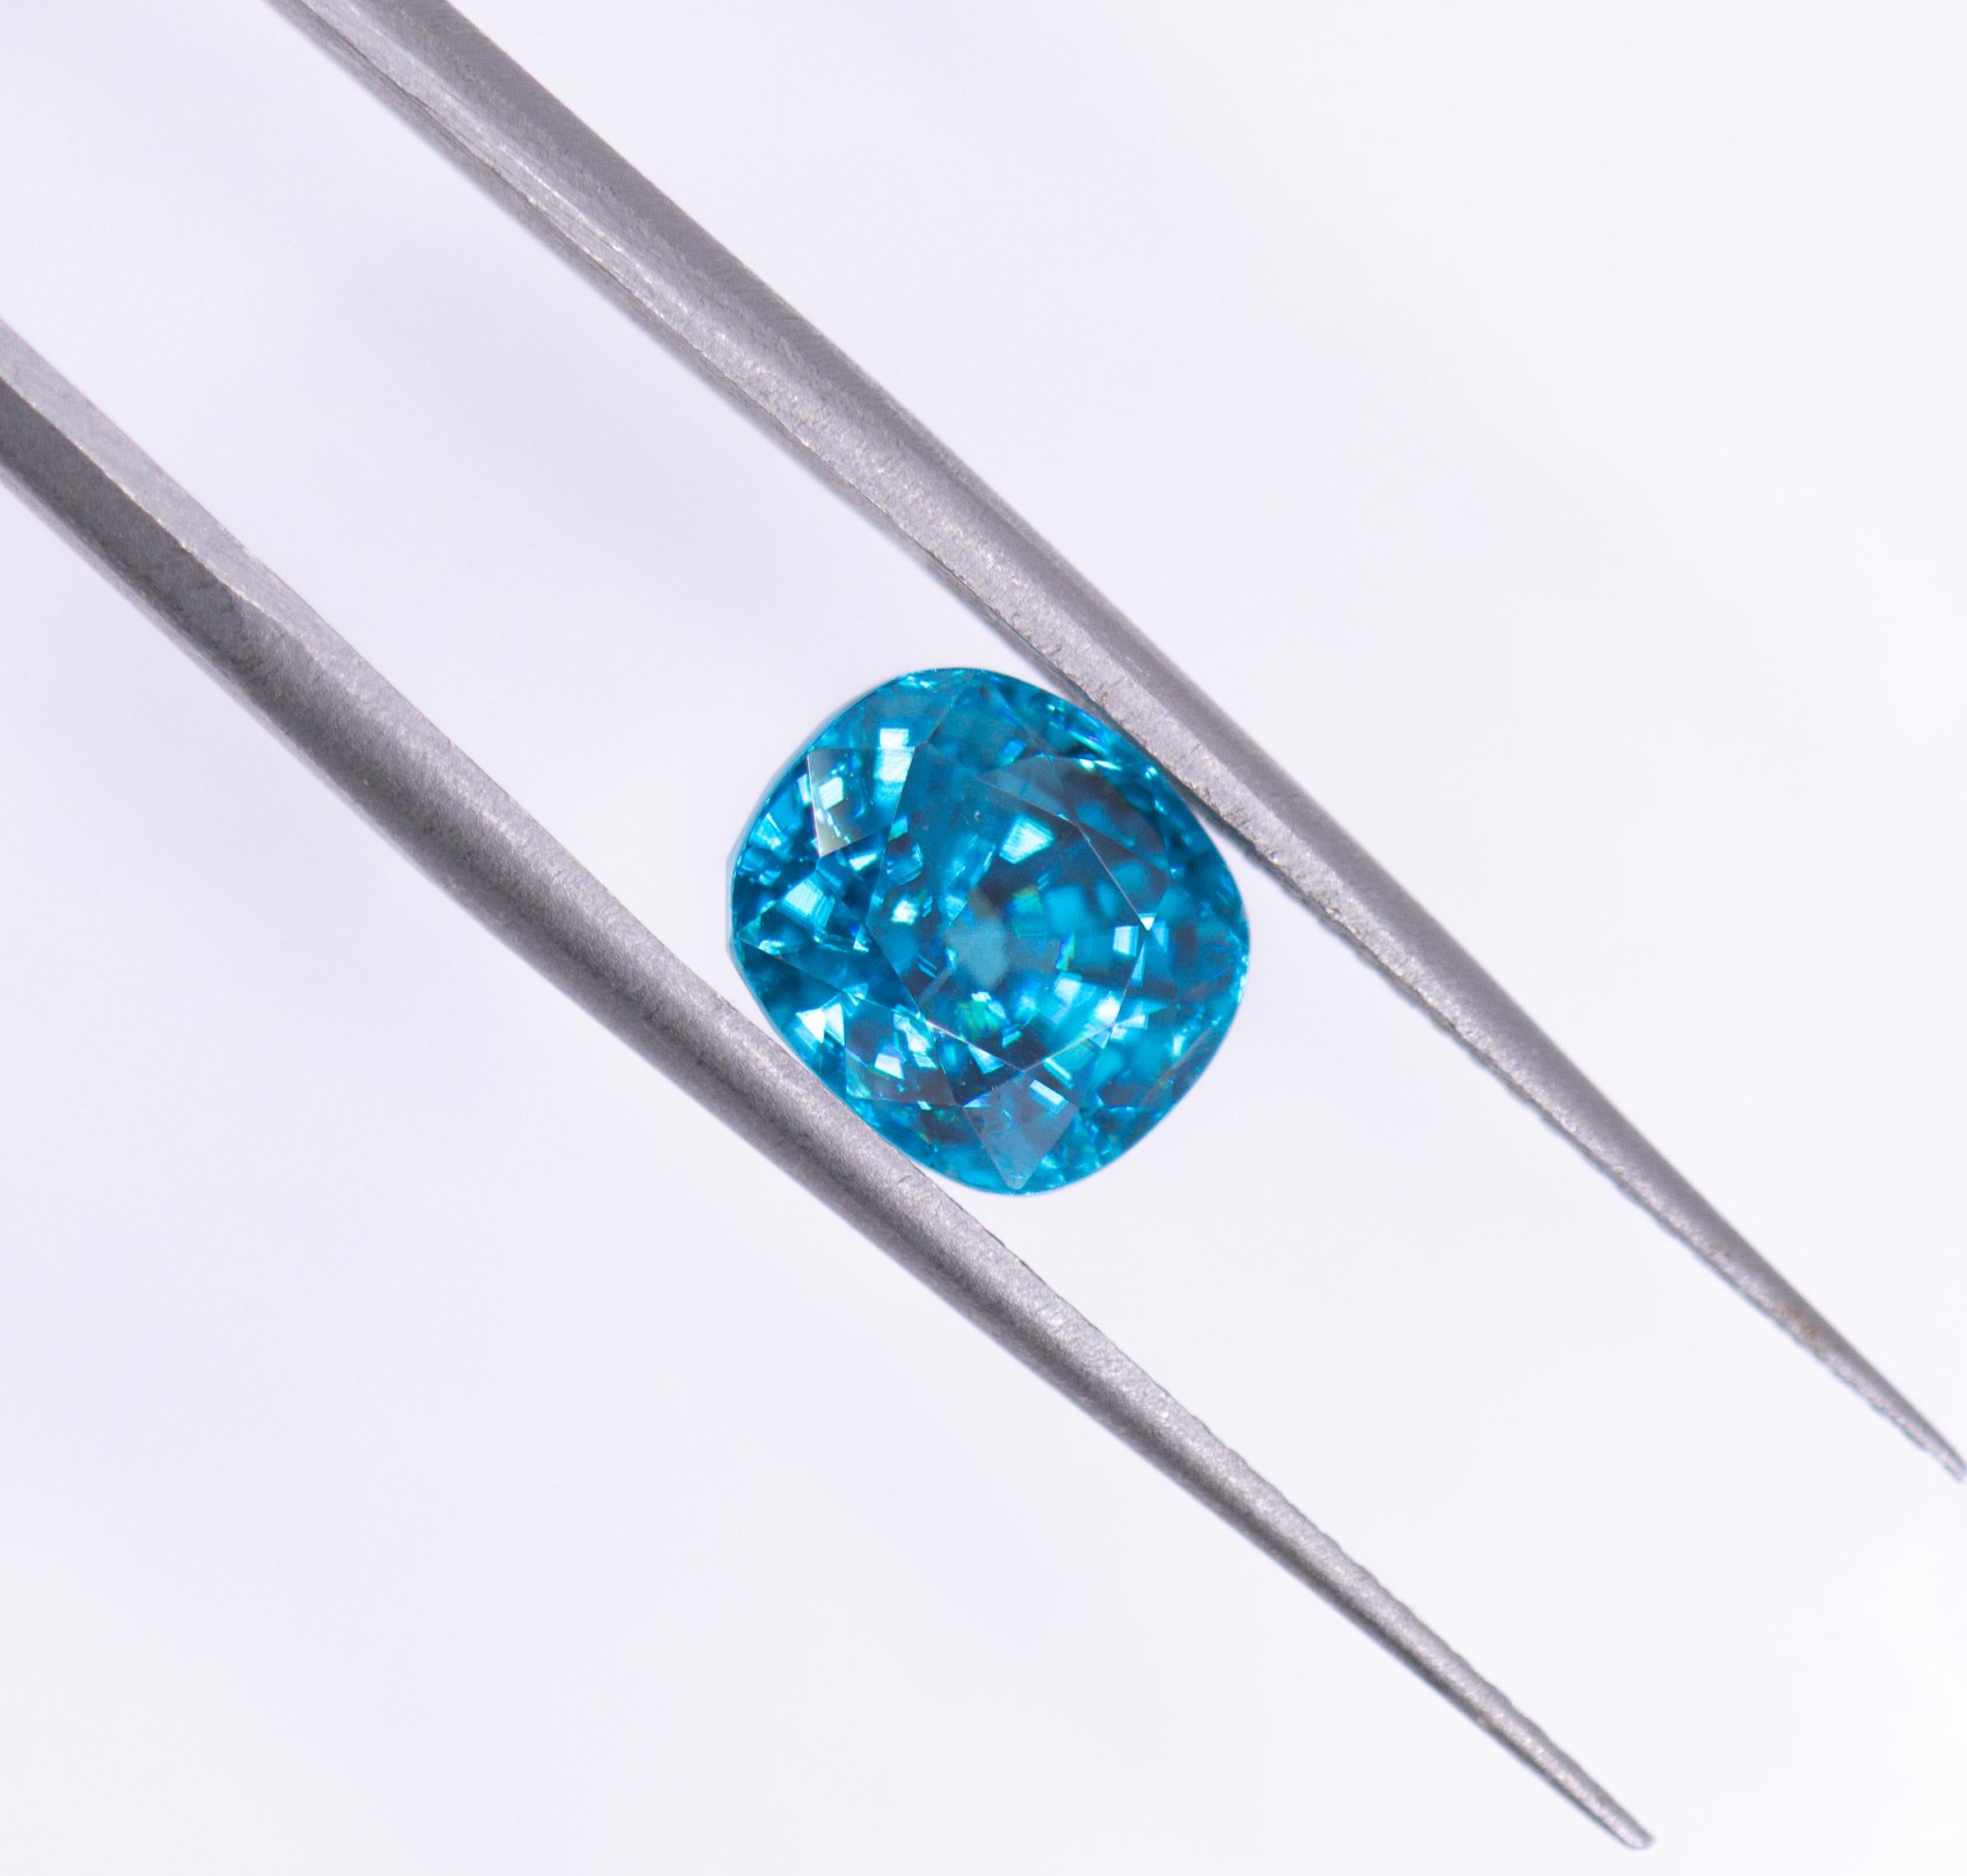 Vivid 5 Carat Blue Zircon Gemstone | Cushion 8.5x7mm